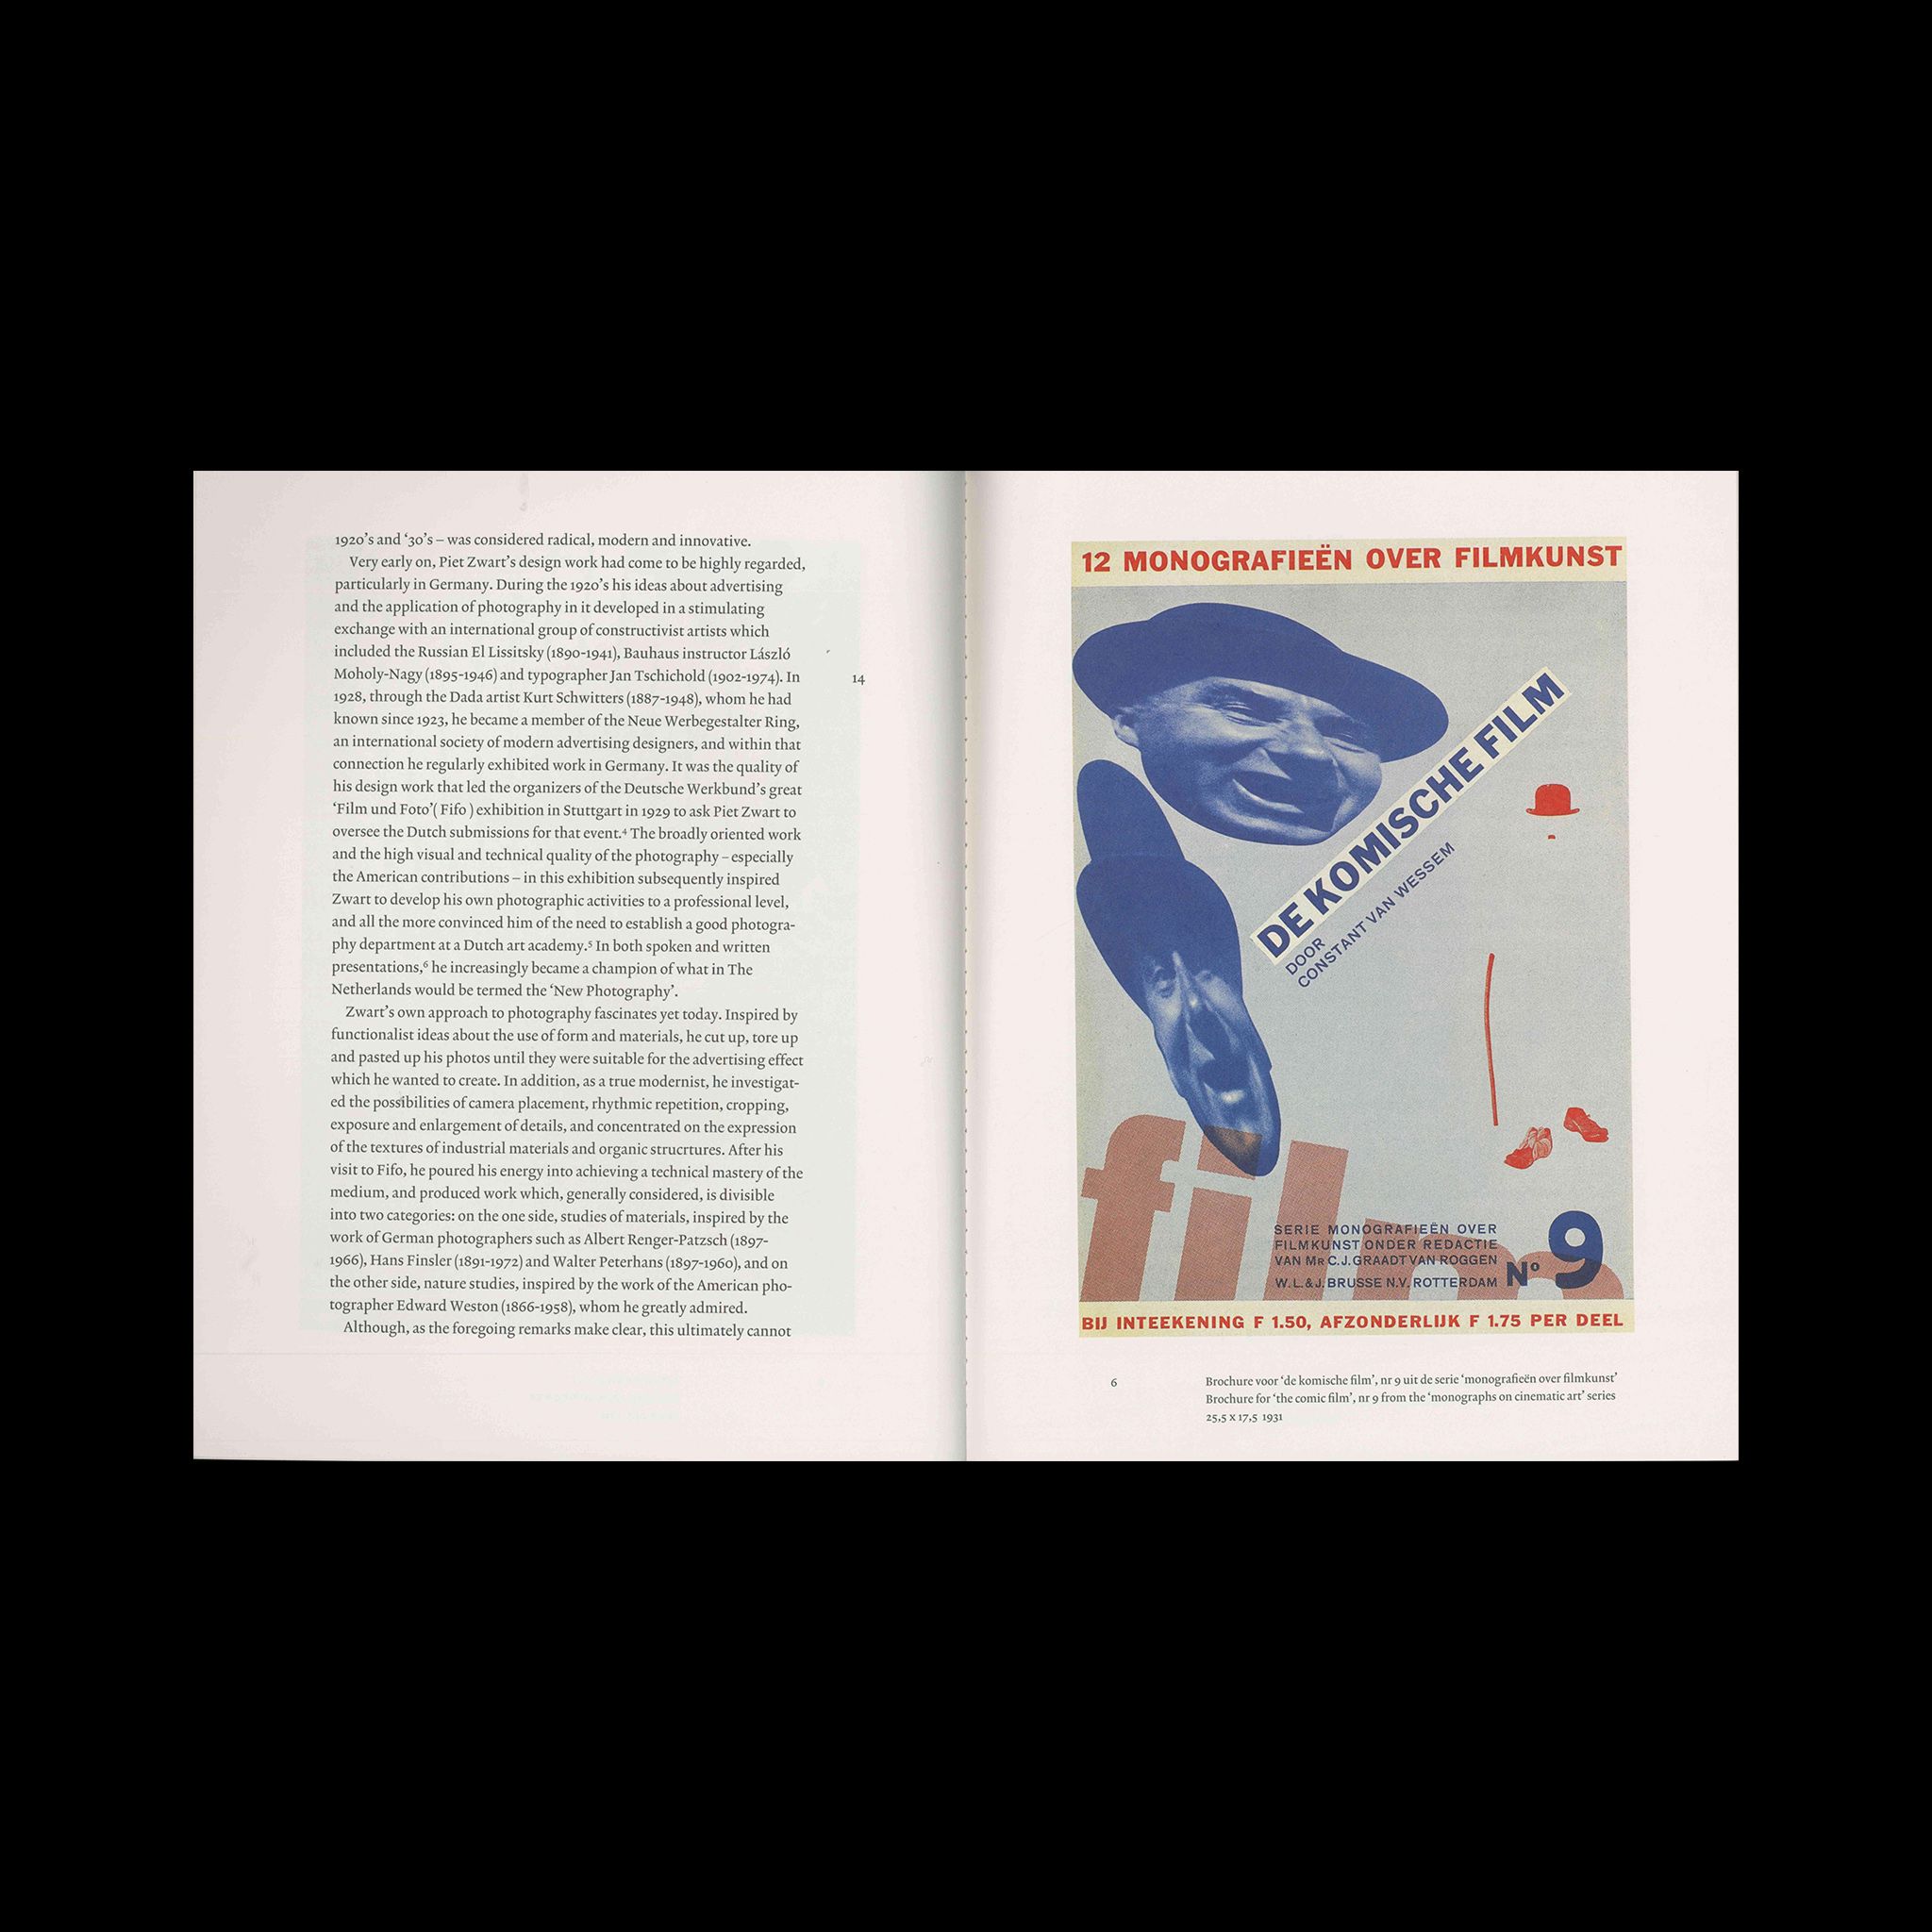 Piet Zwart, Stedelijk Museum, Amsterdam, 1996. Book design by Walter Nikkels